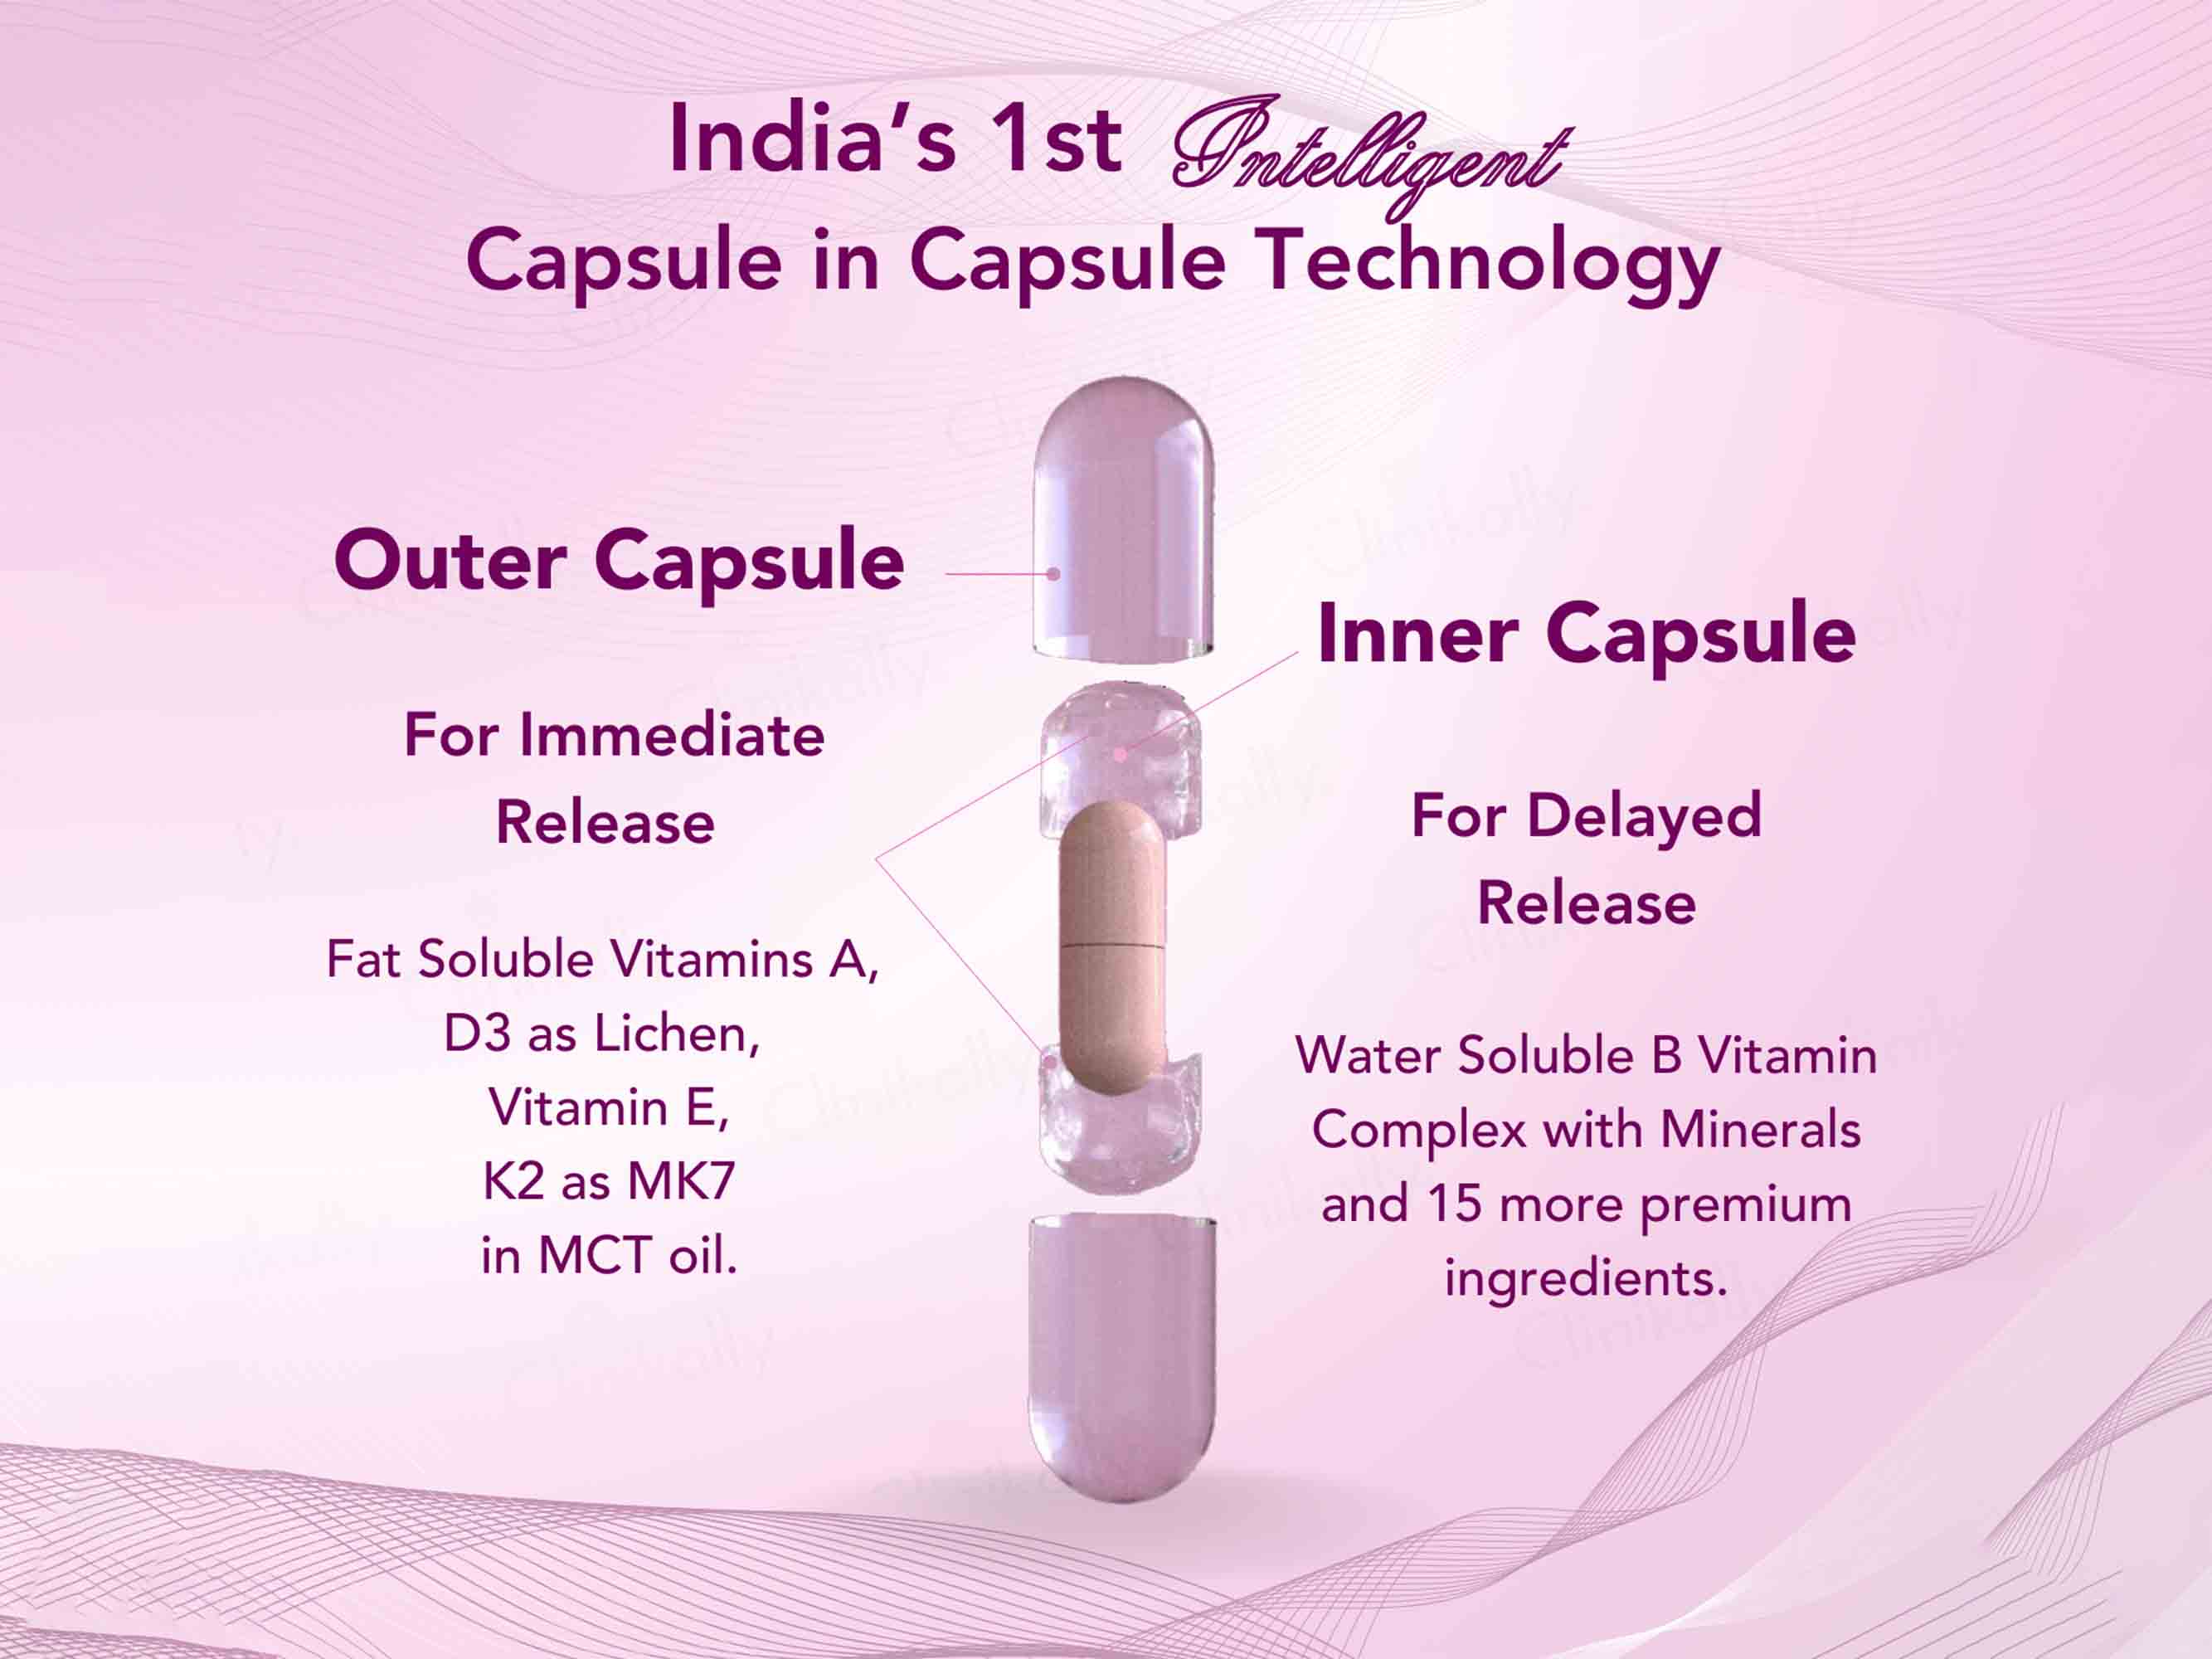 WishNew Wellness Daily Ritual Multivitamin Capsule For Women 18+